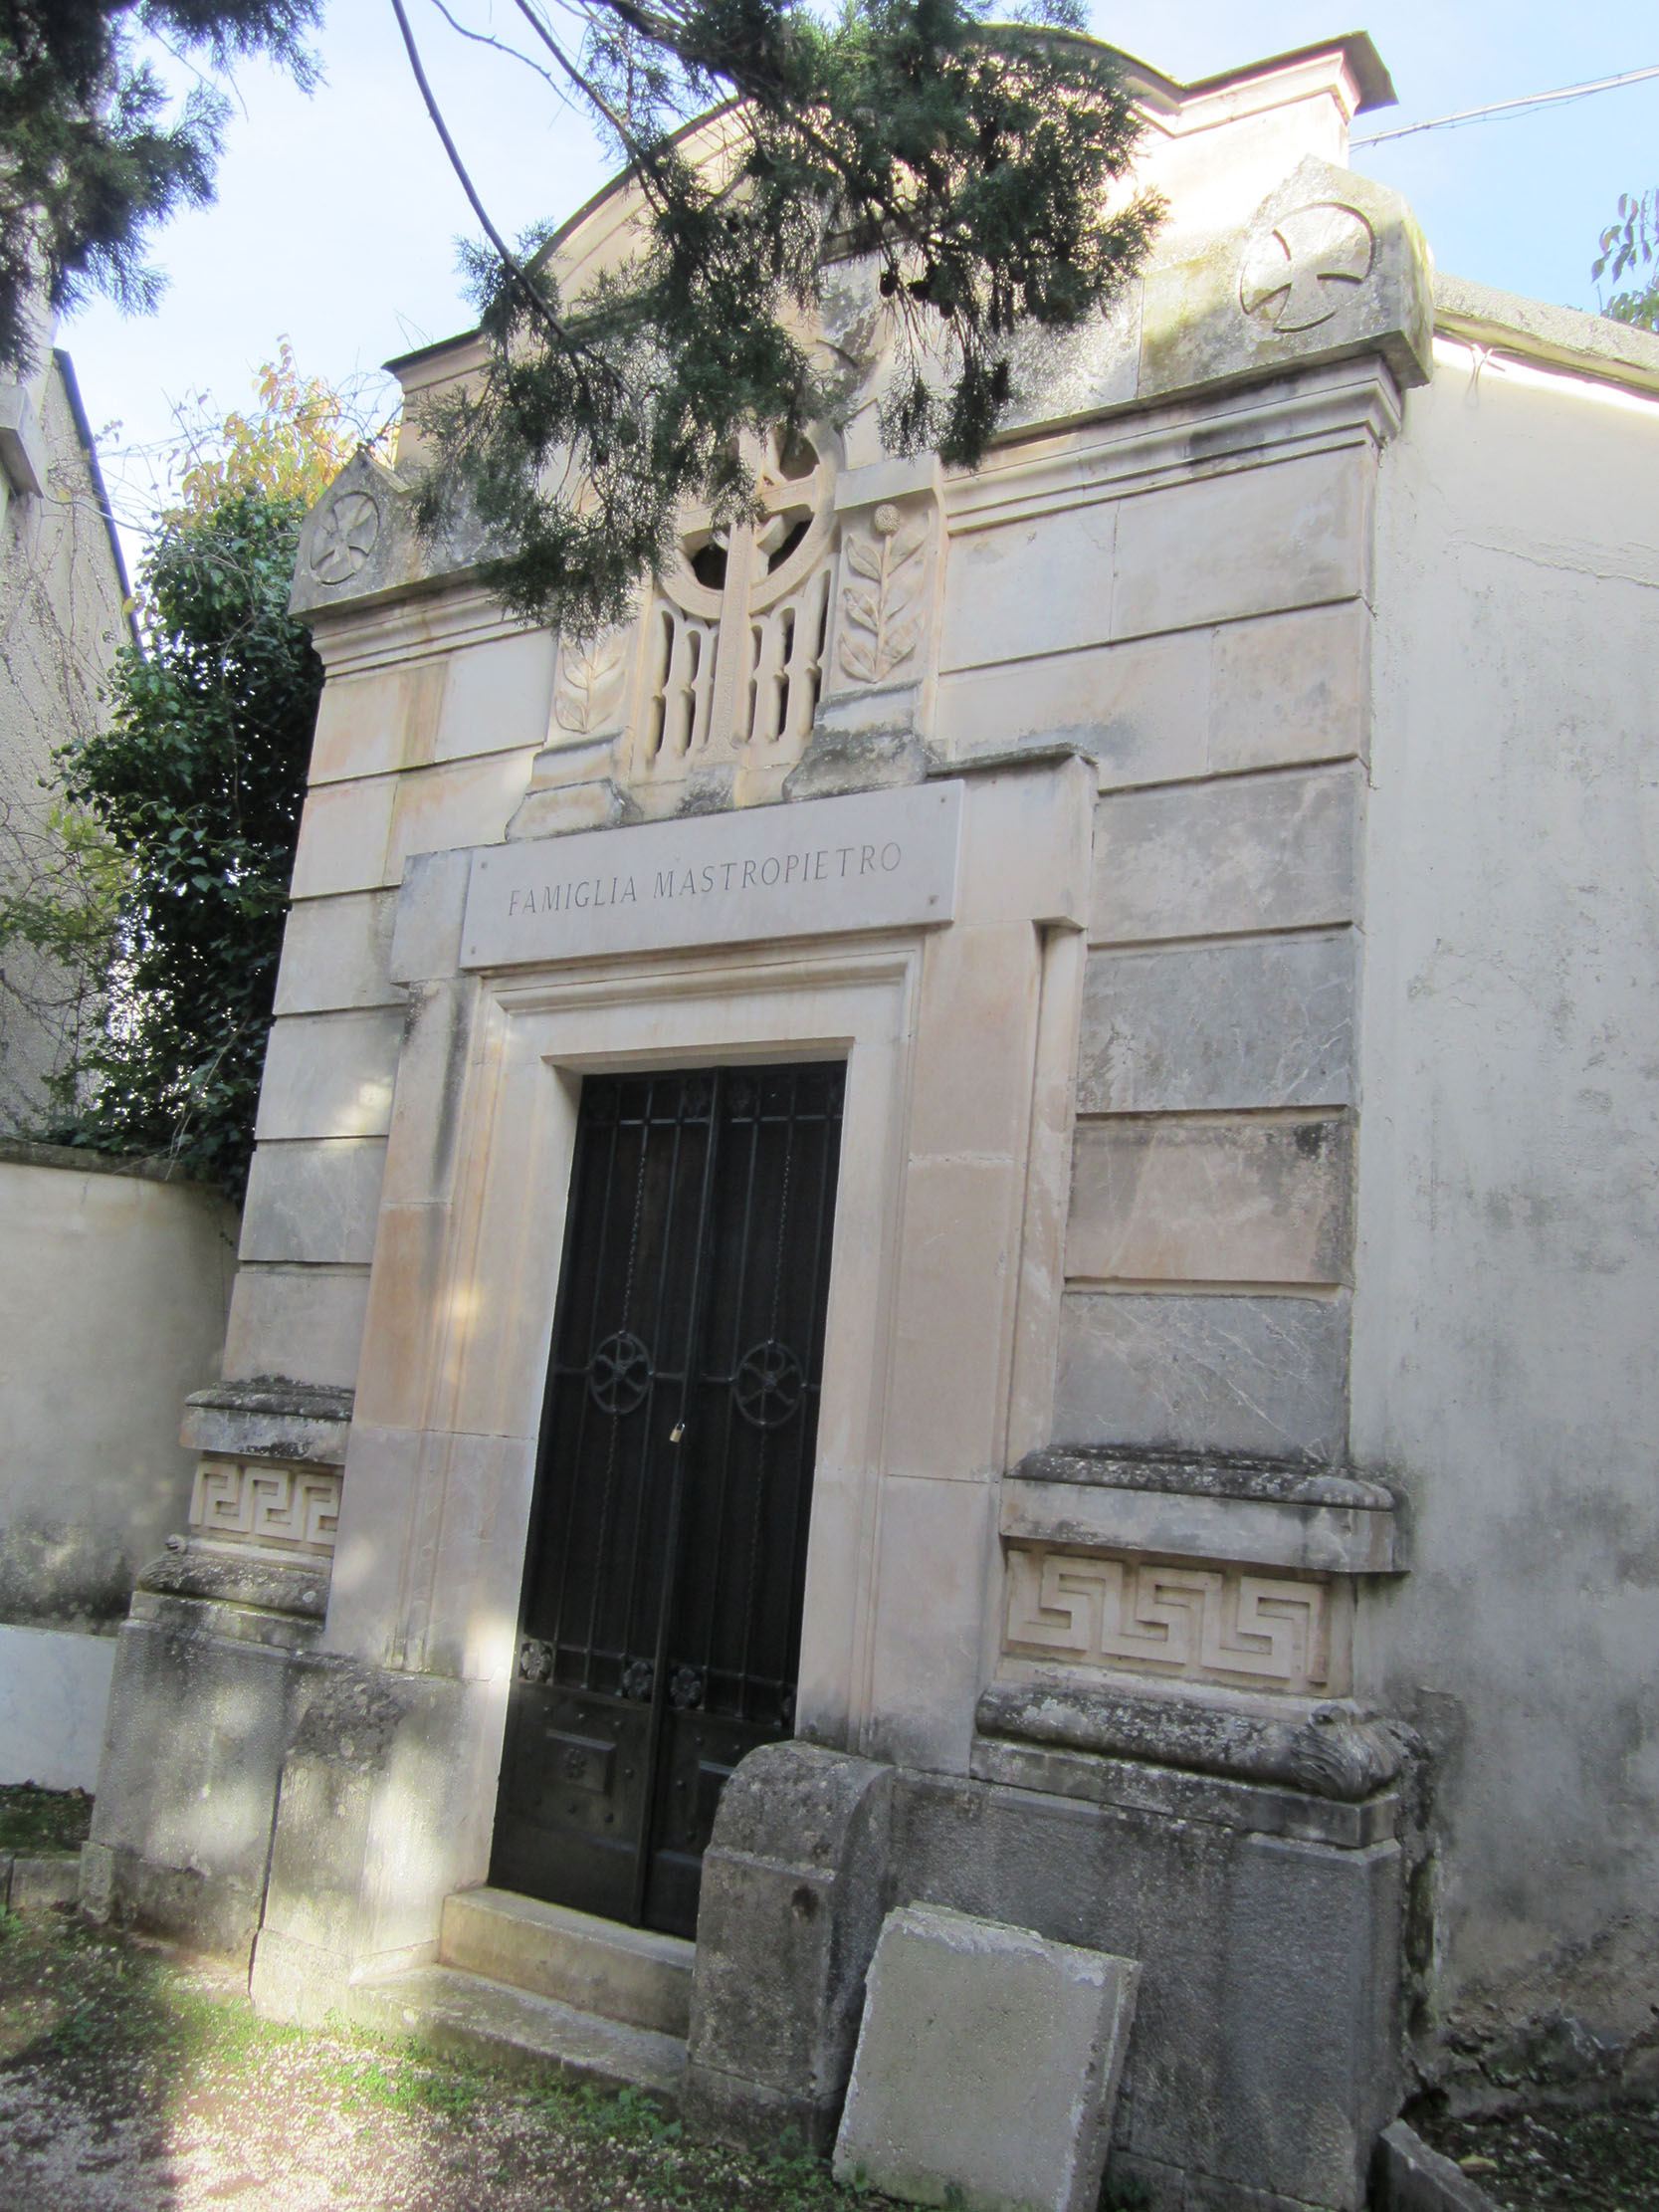 Cappella cimiteriale Famiglia Mastropietro (cimitero, monumentale) - Sulmona (AQ) 